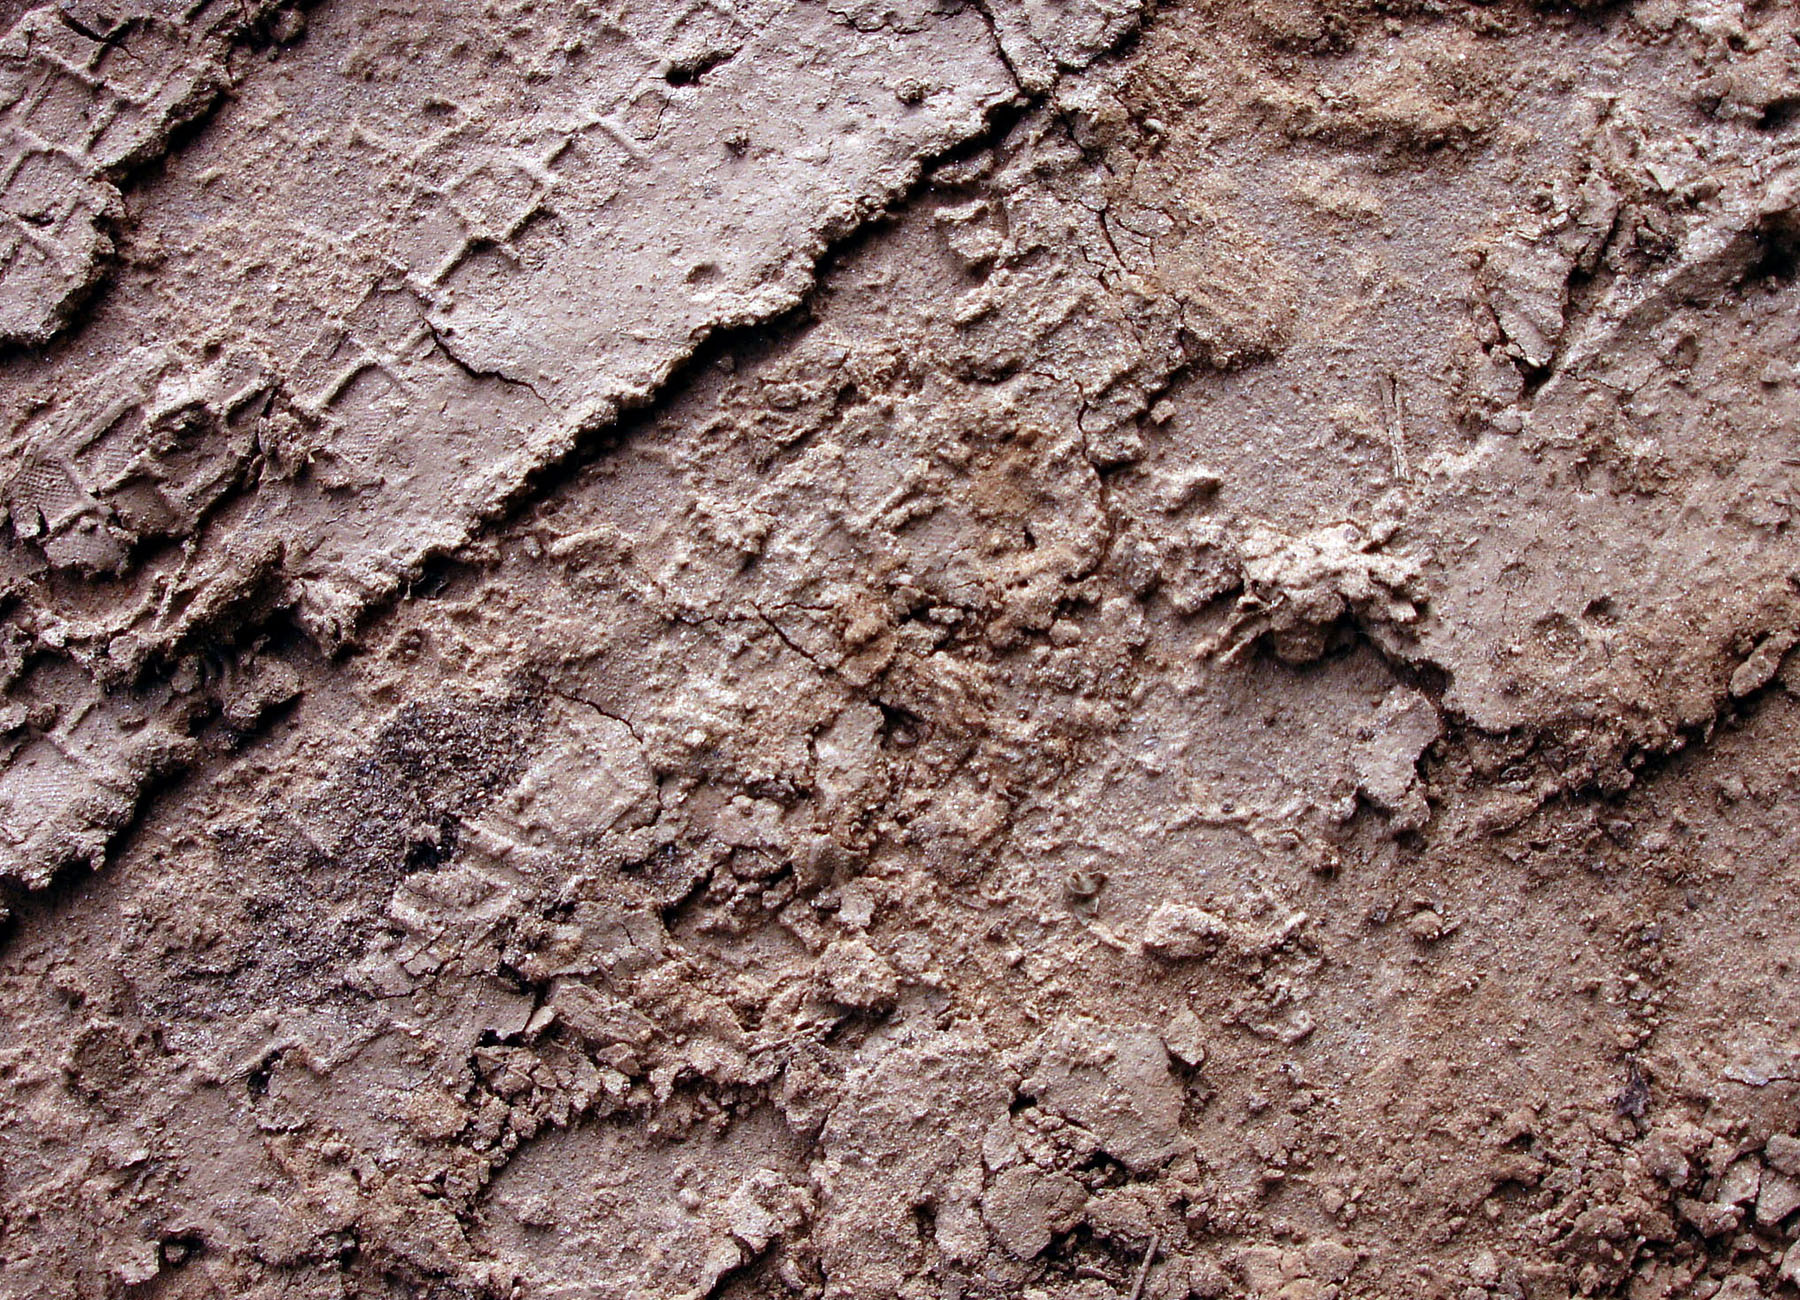 Mud surface, Brown, Dirt, Earth, Muddy, HQ Photo